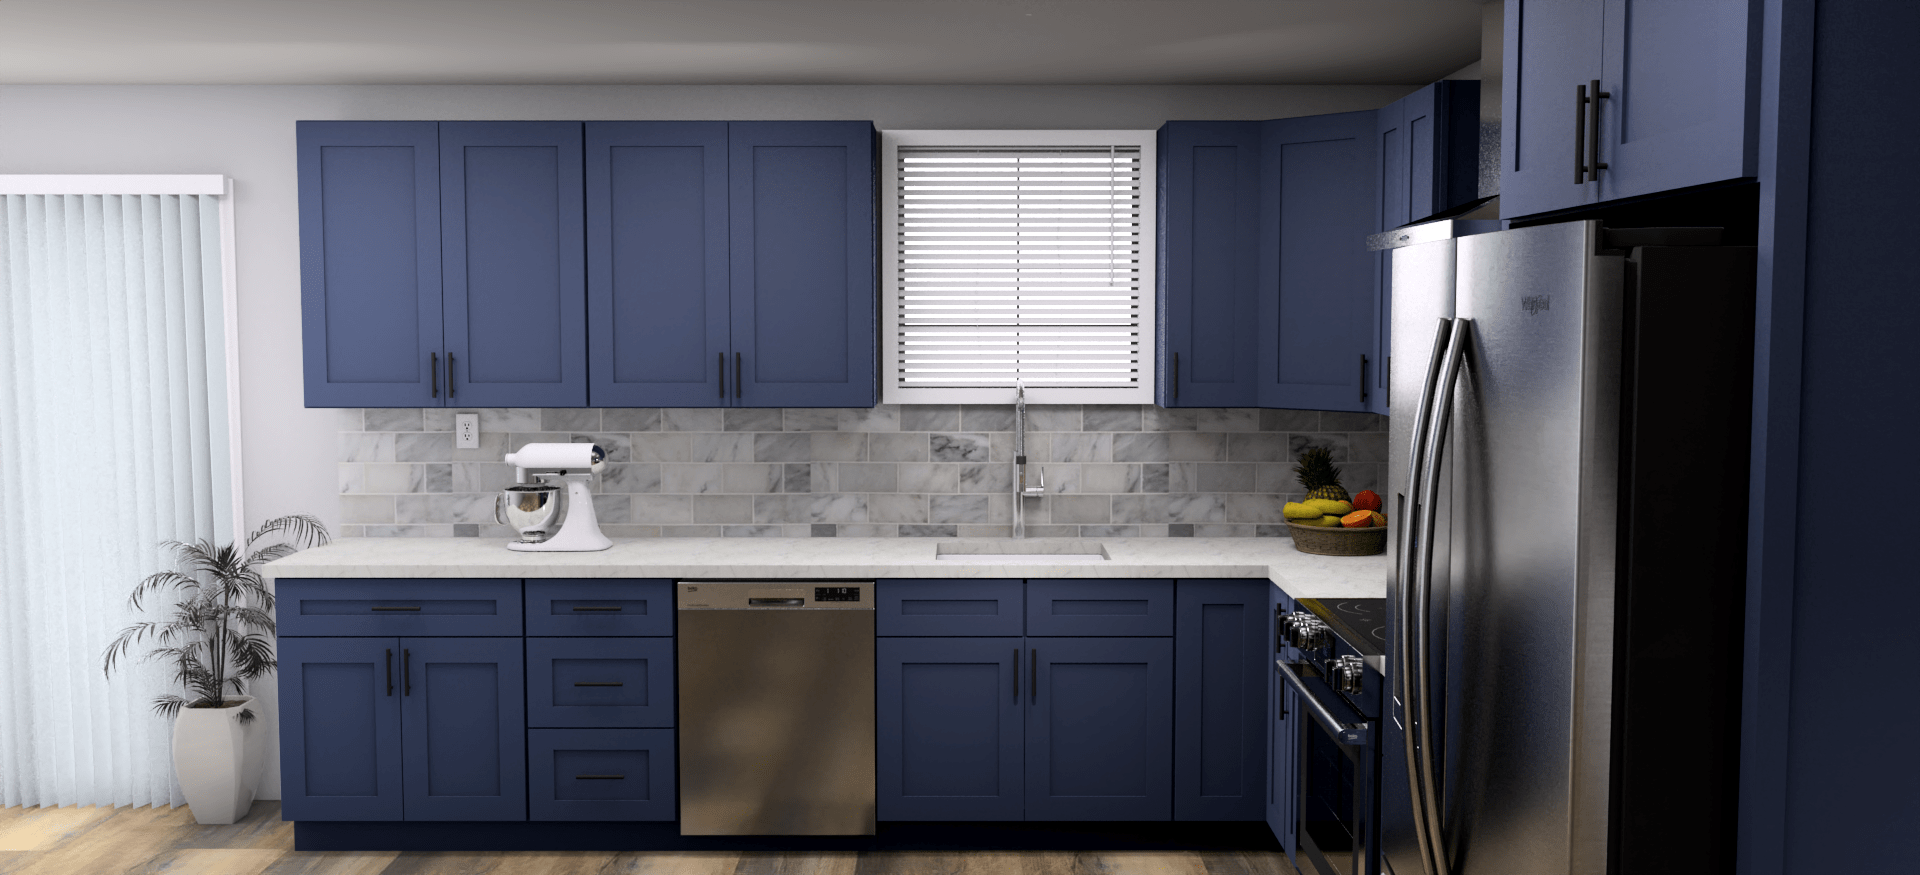 LessCare Danbury Blue 12 x 12 L Shaped Kitchen Side Layout Photo